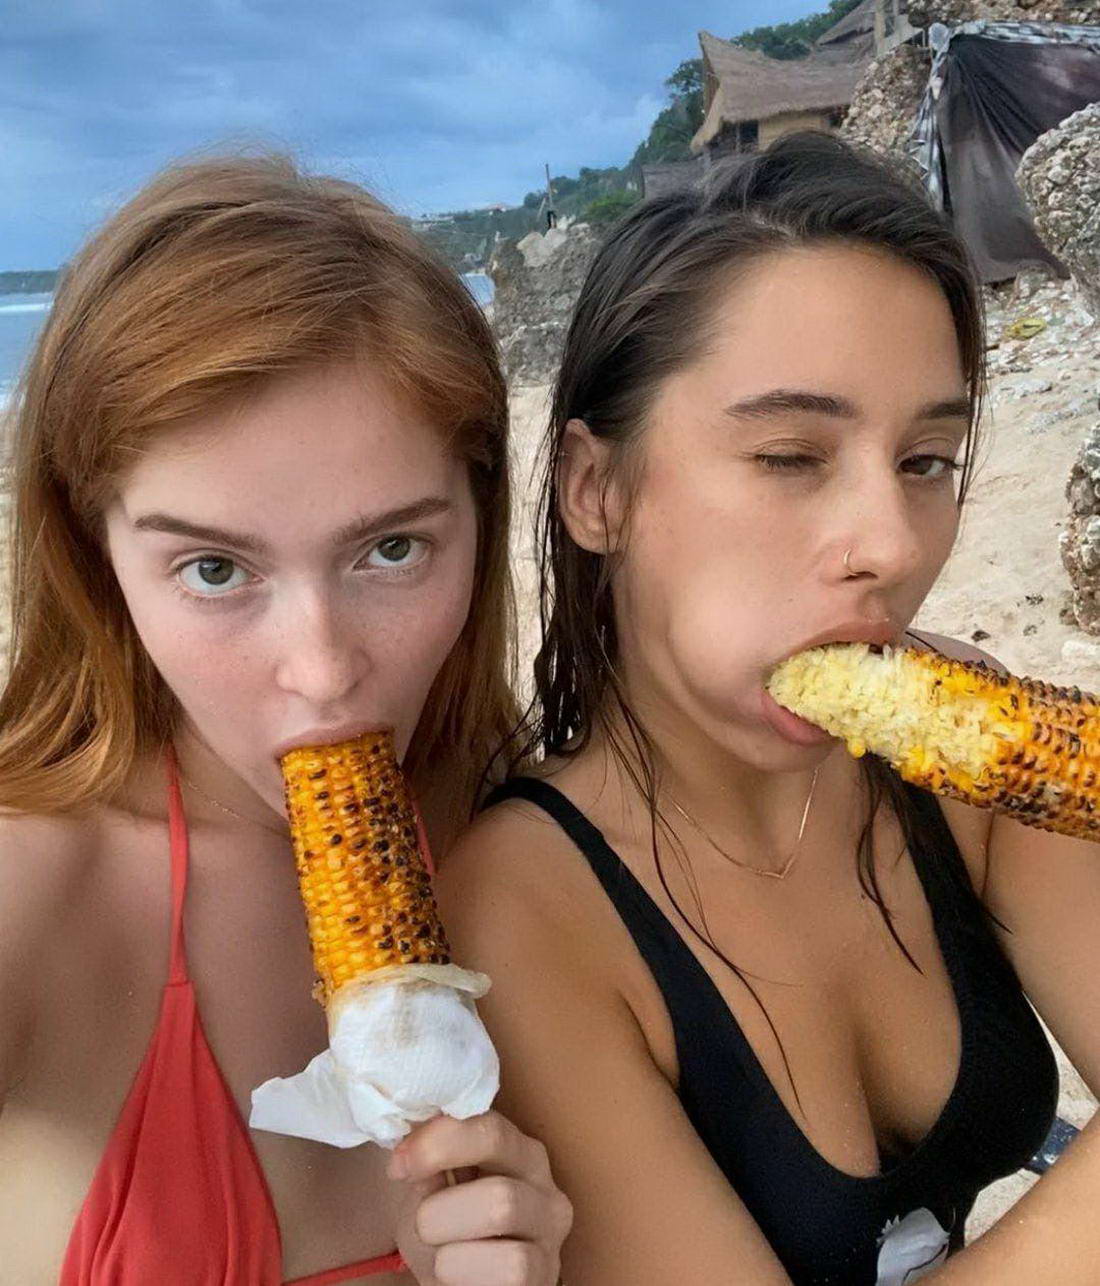 girls seductively eating corn on the cob